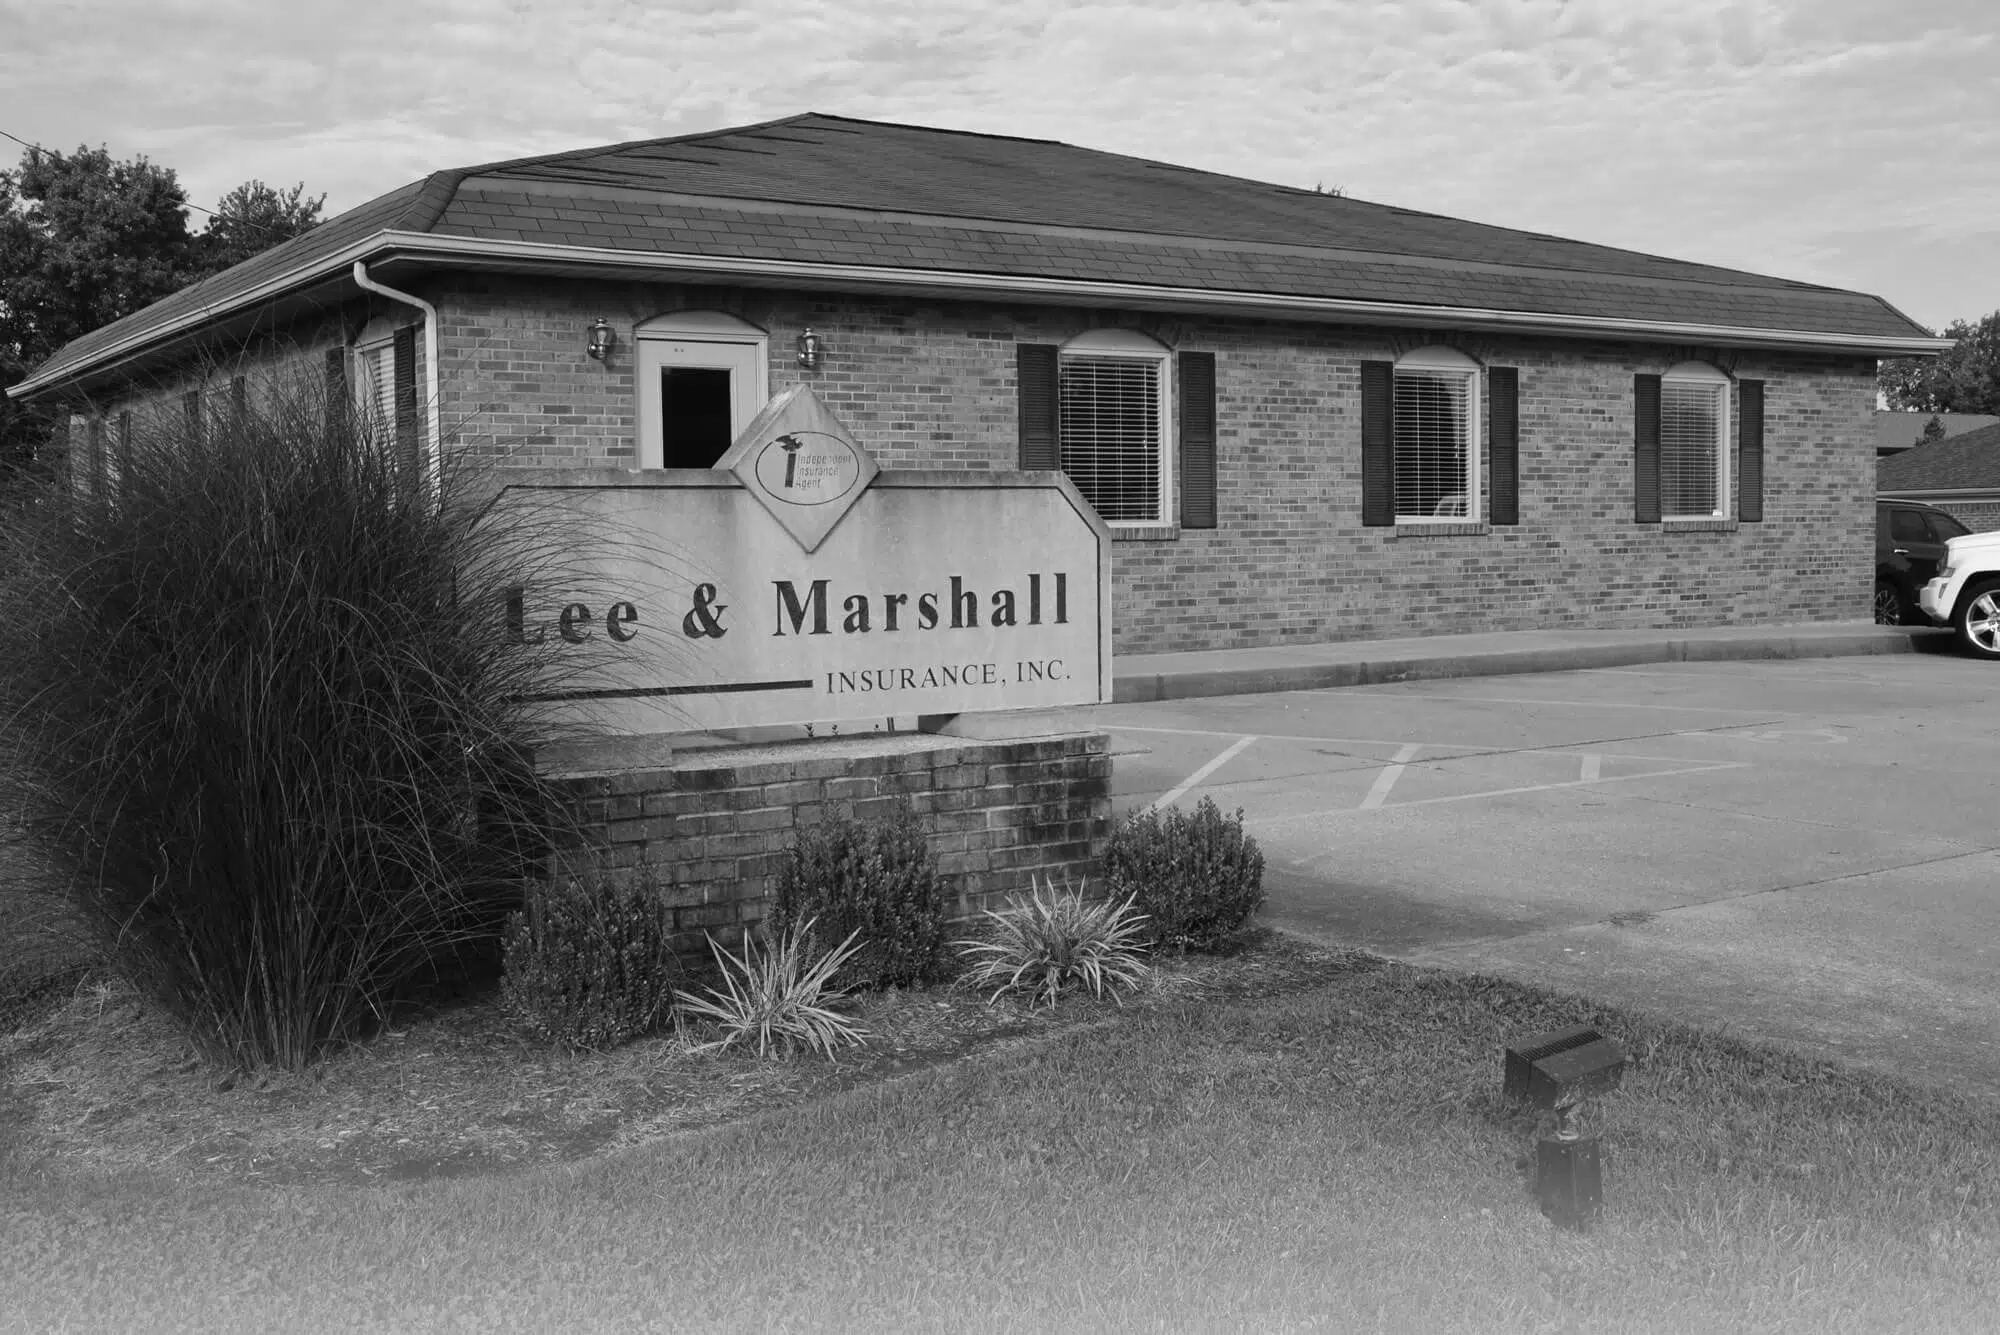 Lee & Marshall Building Exterior - B&W